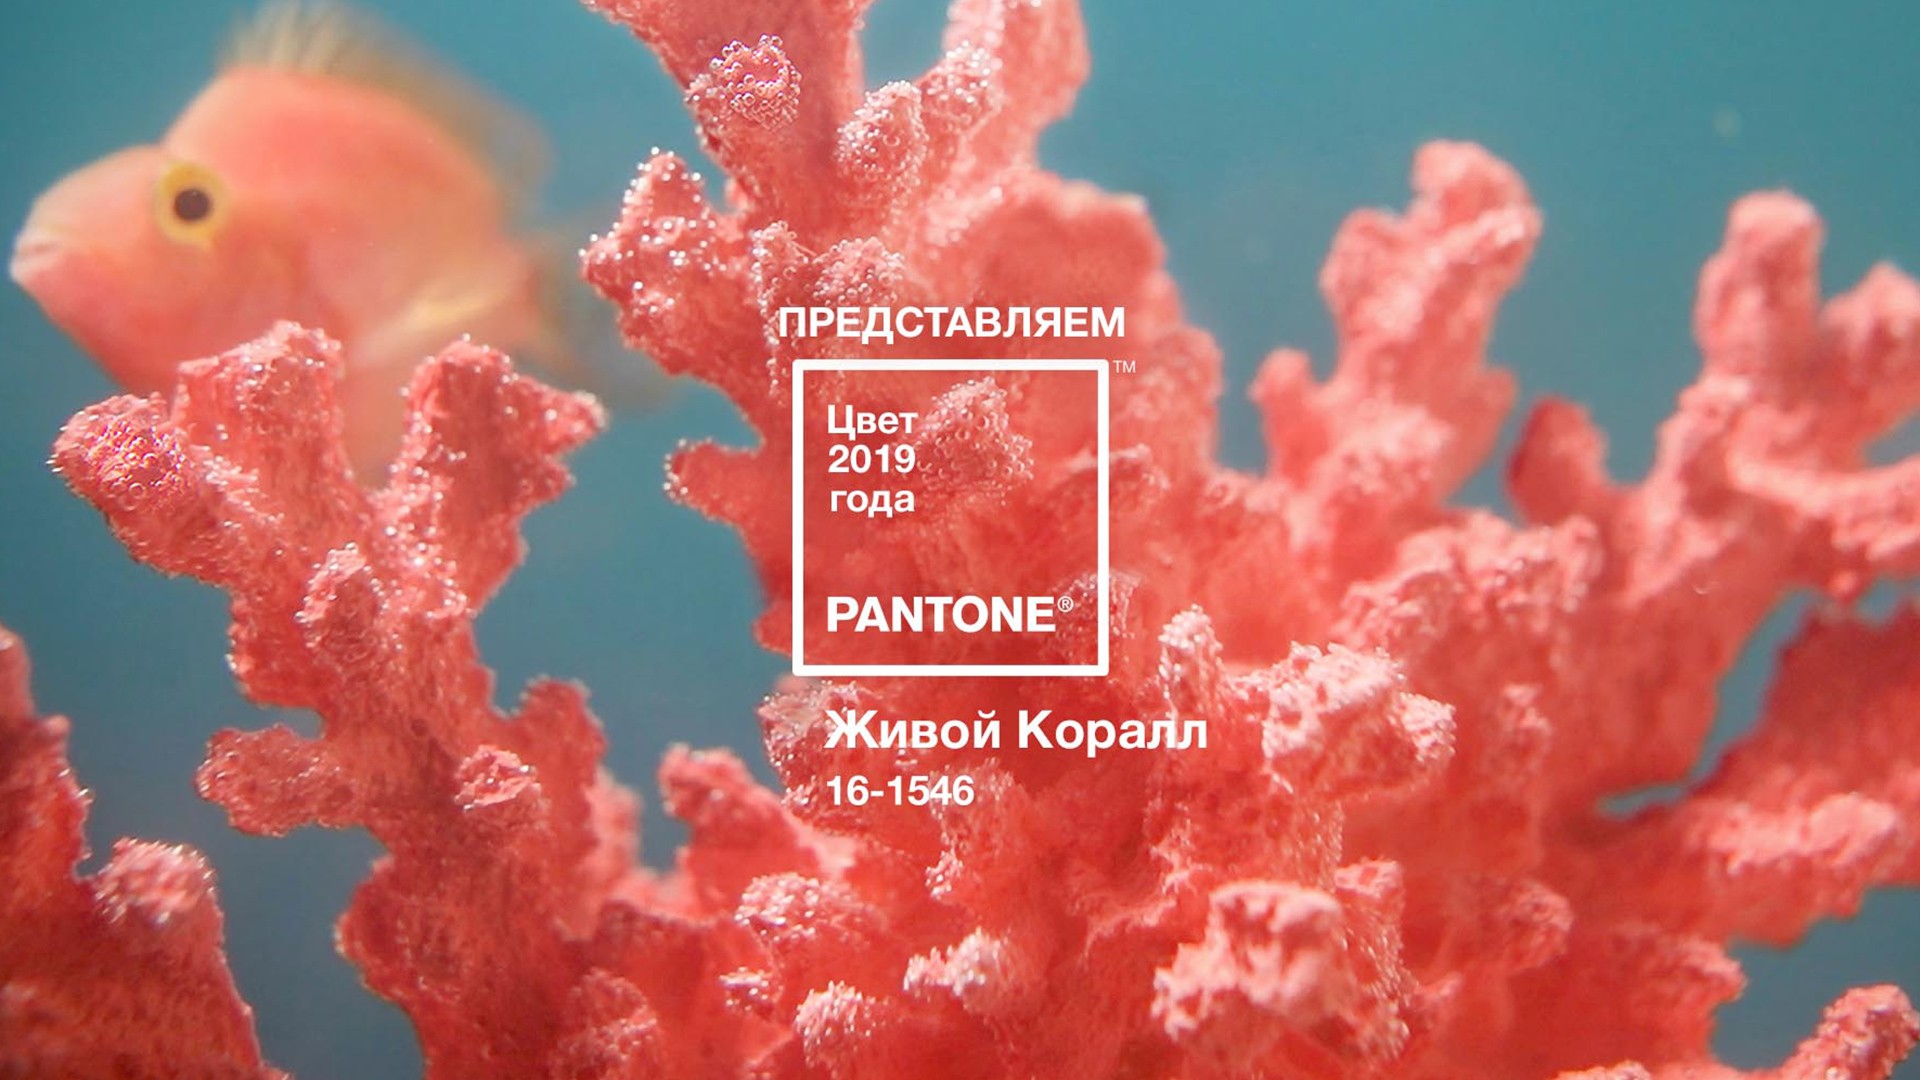 Институт Pantone определил цвет 2019 года